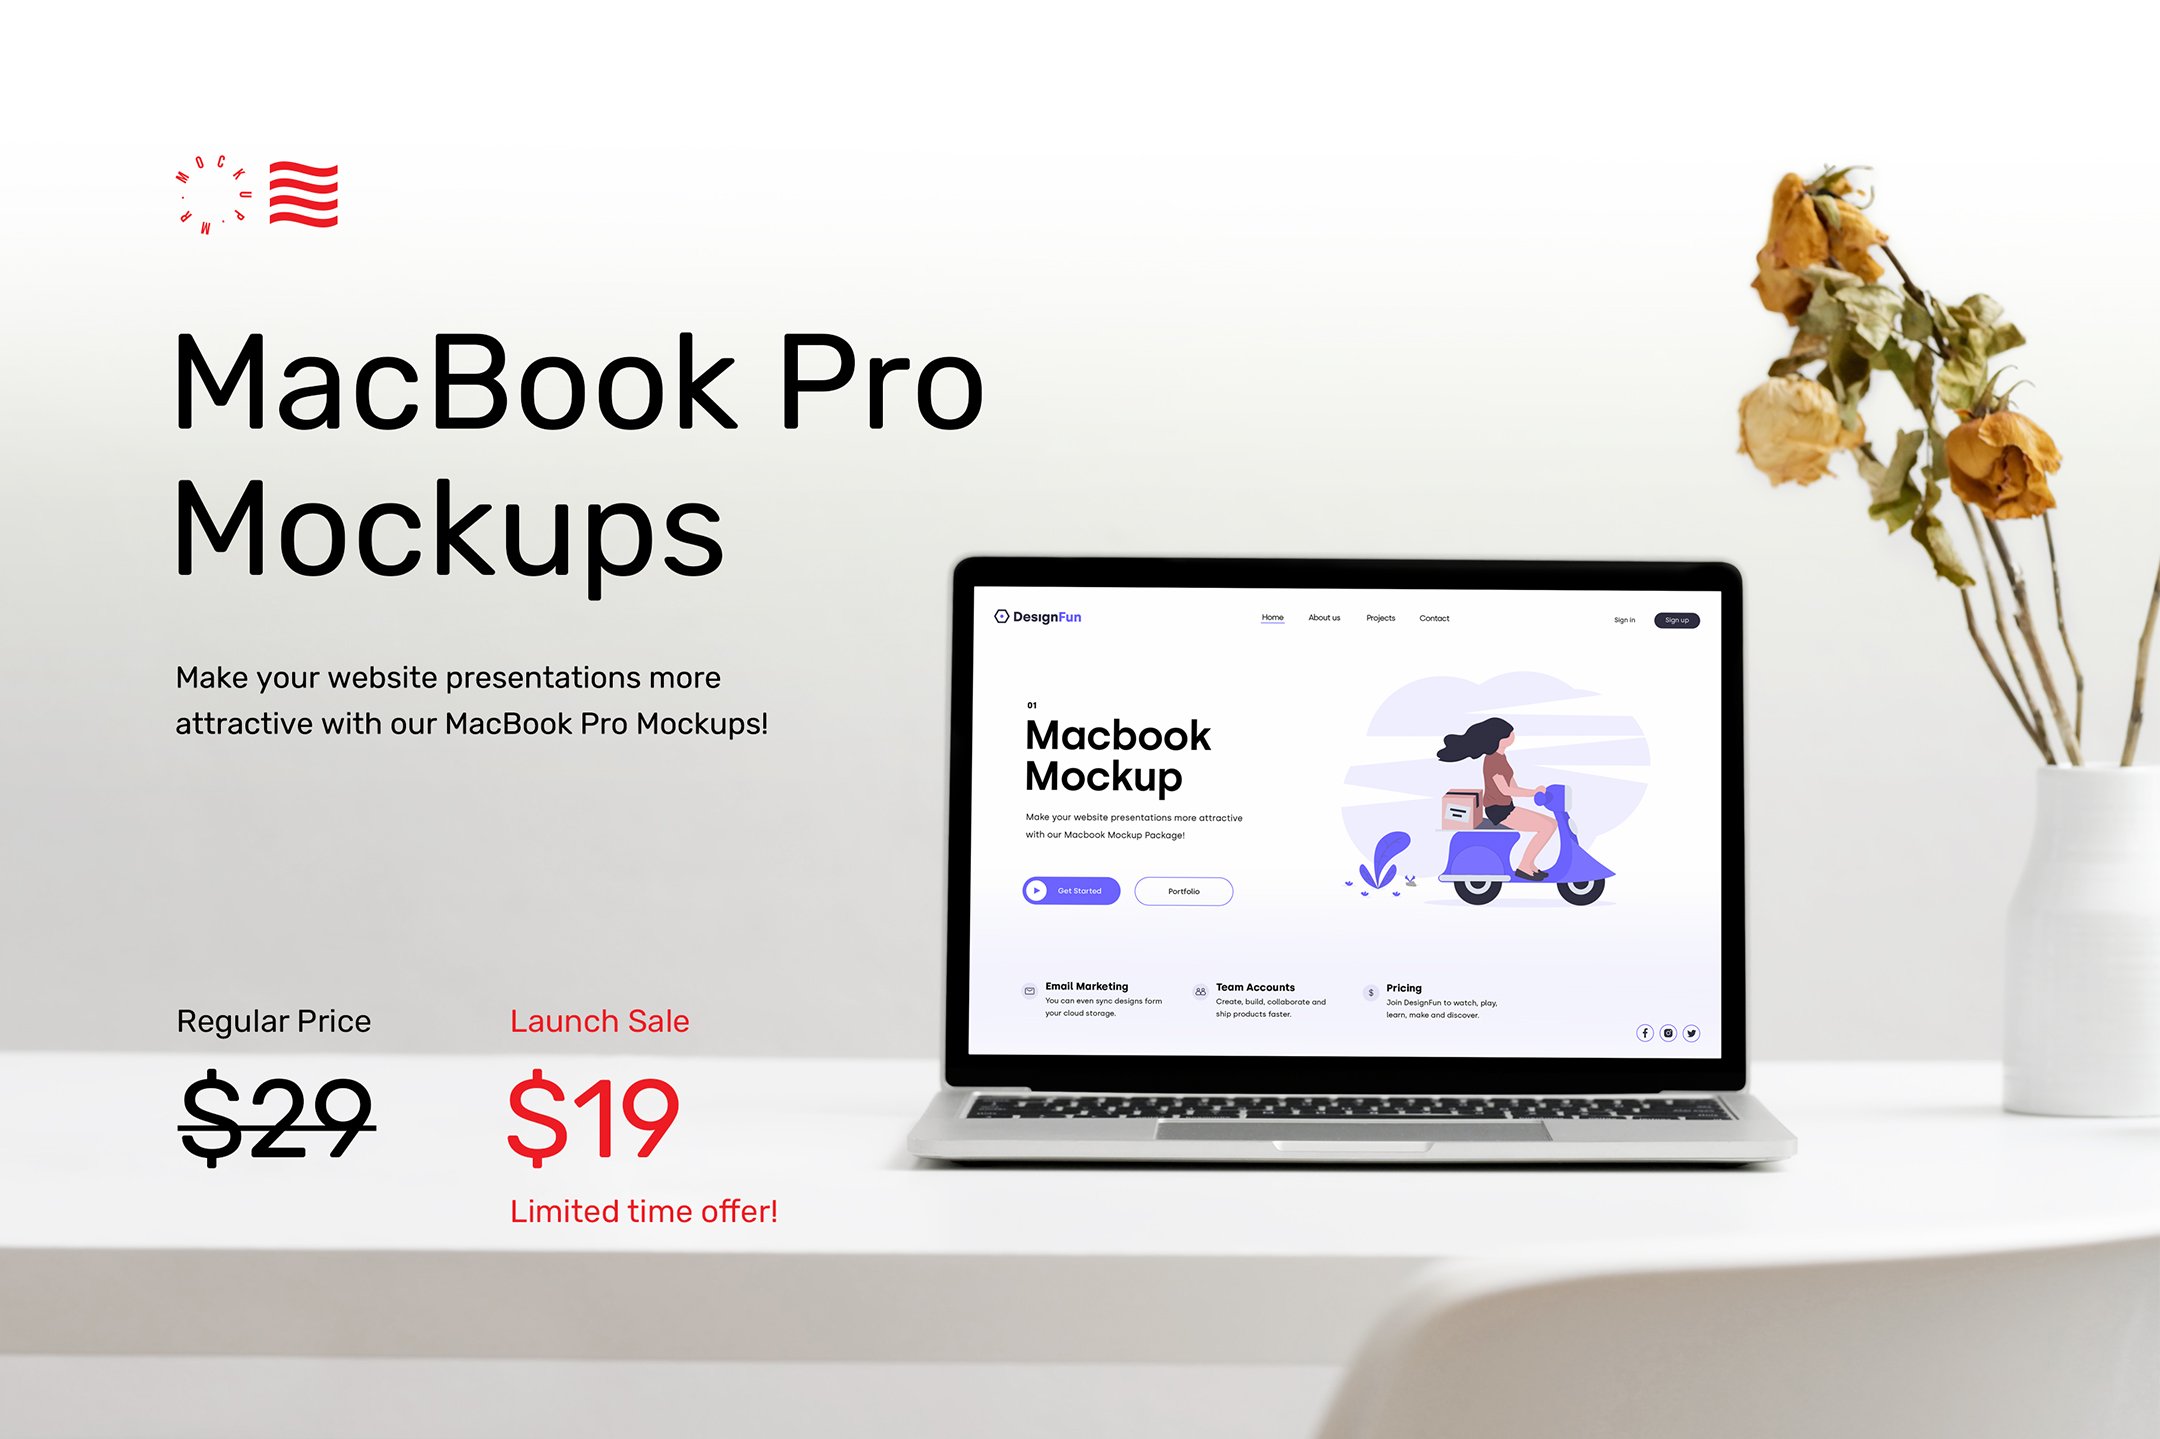 MacBook Mockups - Workspace Mockups preview image.